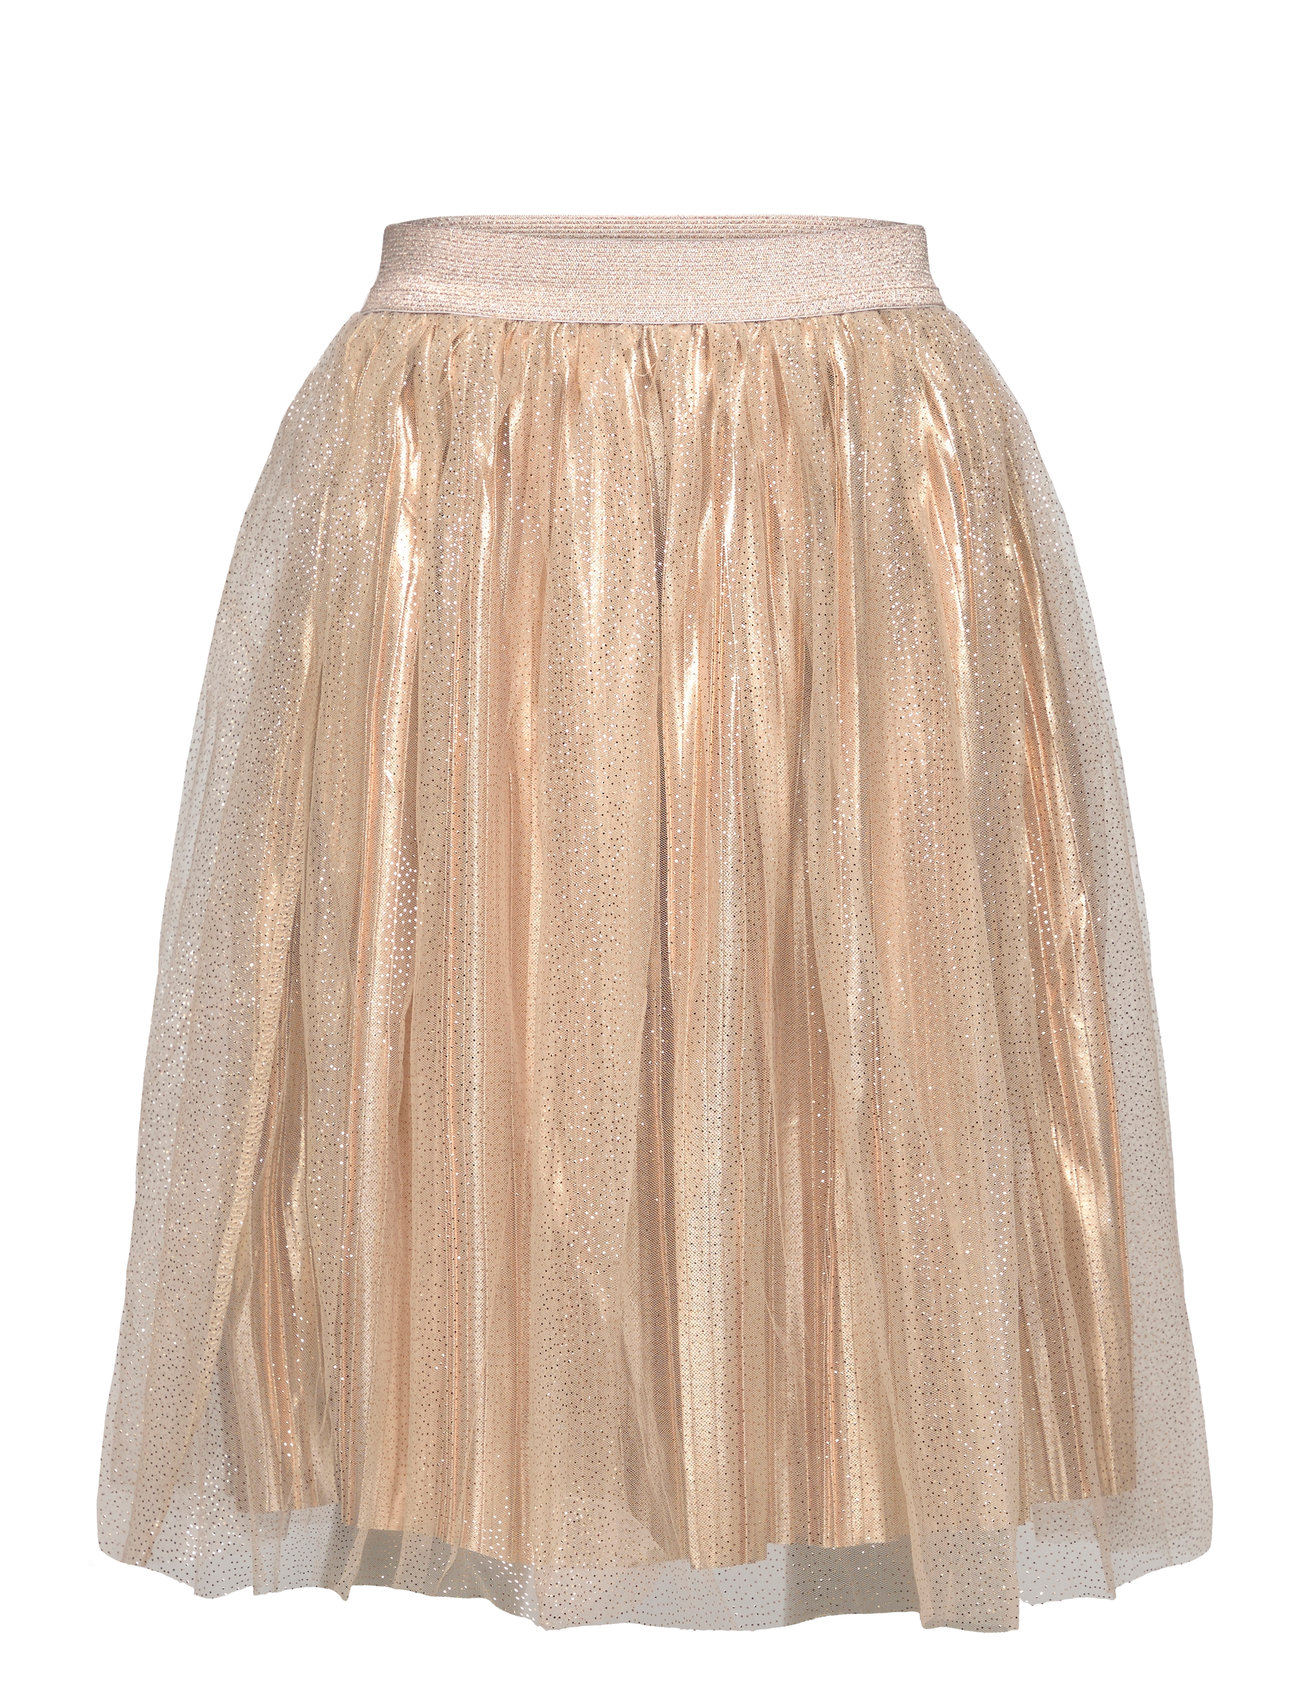 Metallic Tulle Skirt Dresses & Skirts Skirts Tulle Skirts Gold Mango